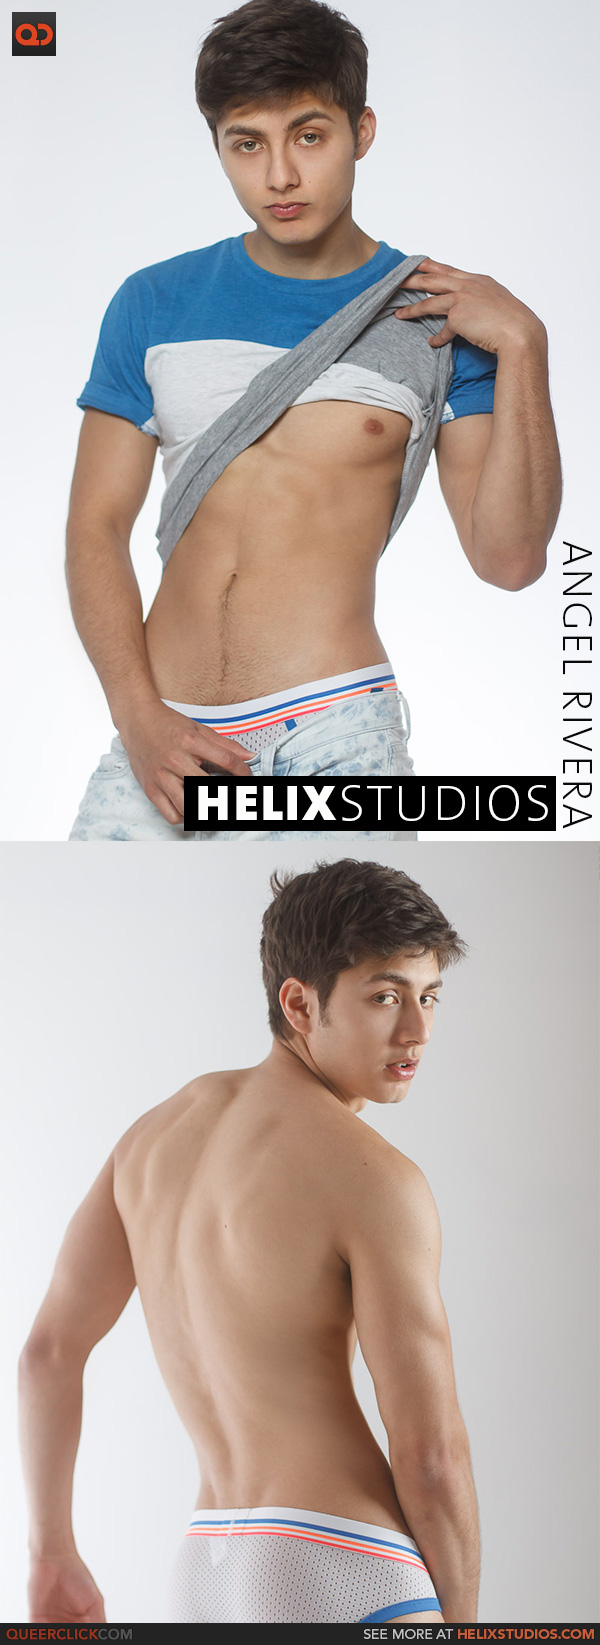 Helix Studios: Angel Rivera